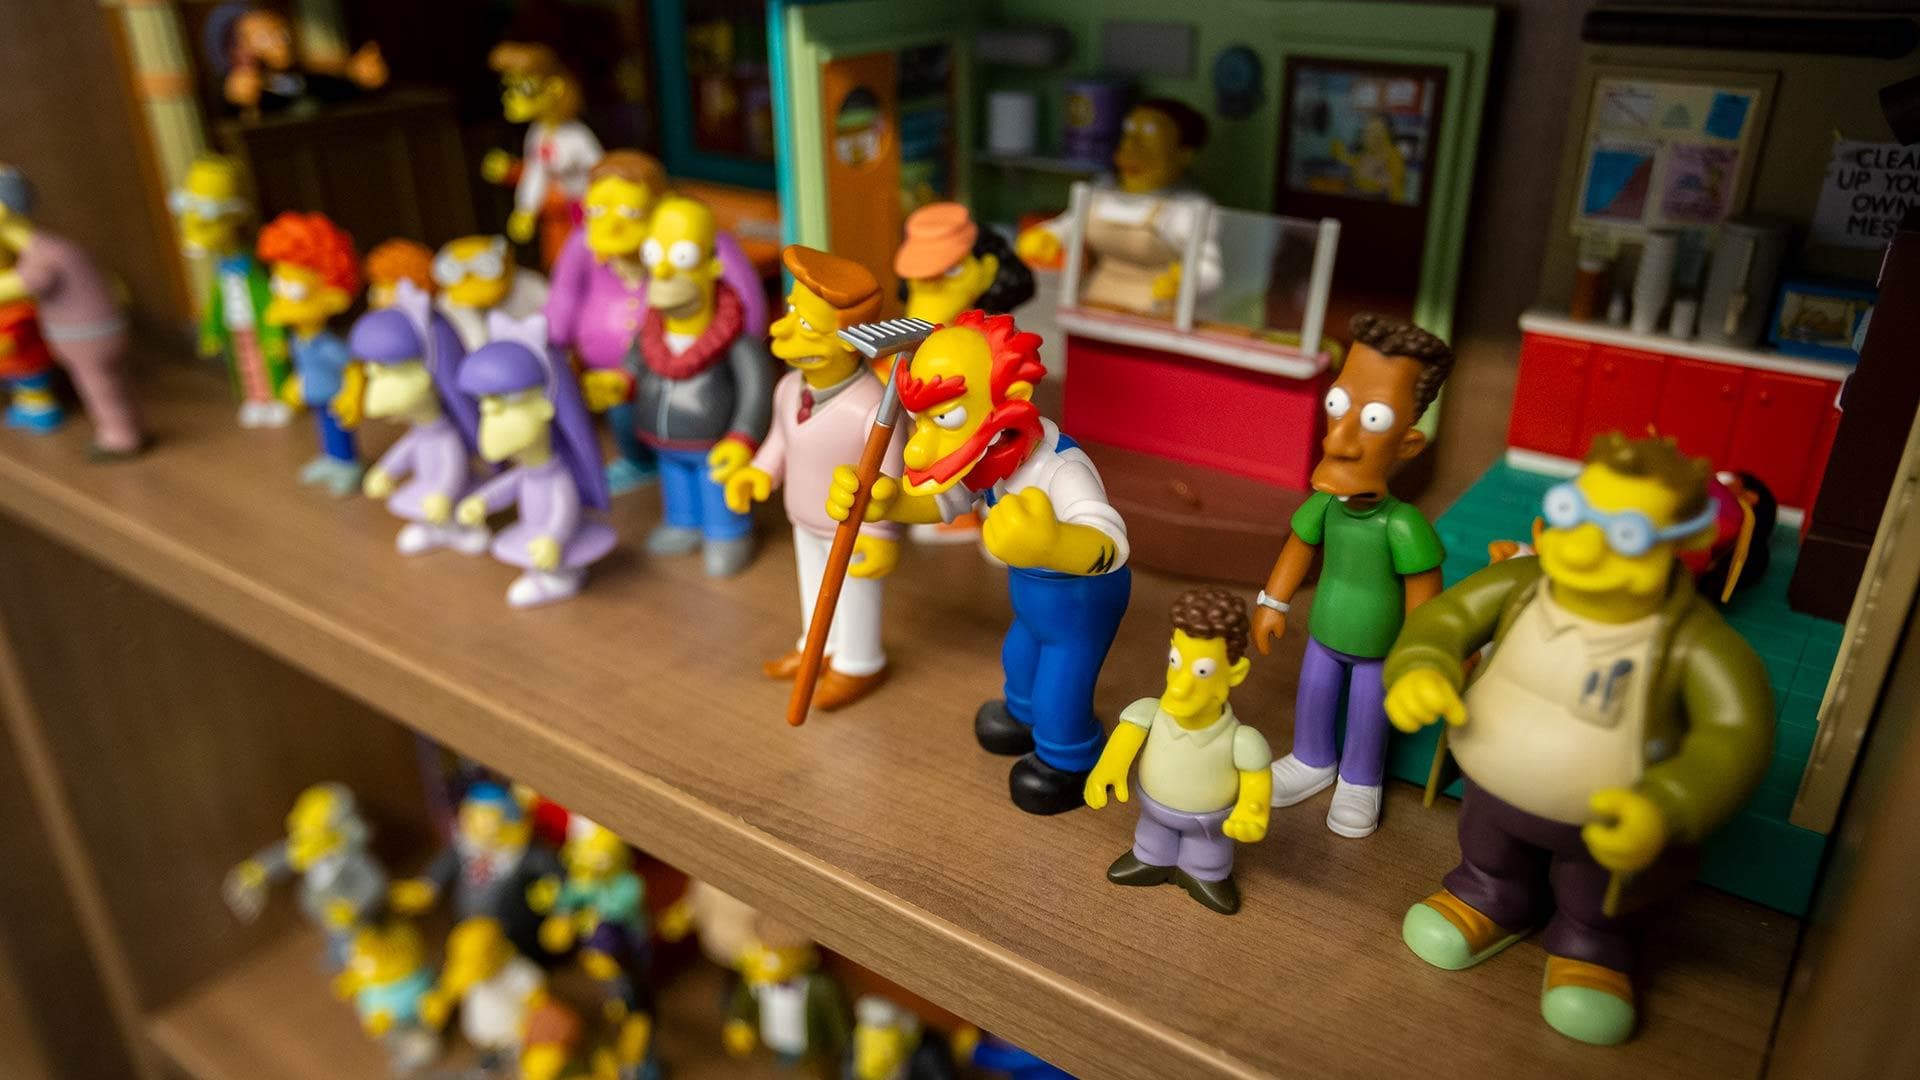 shelves of Simpsons figurines